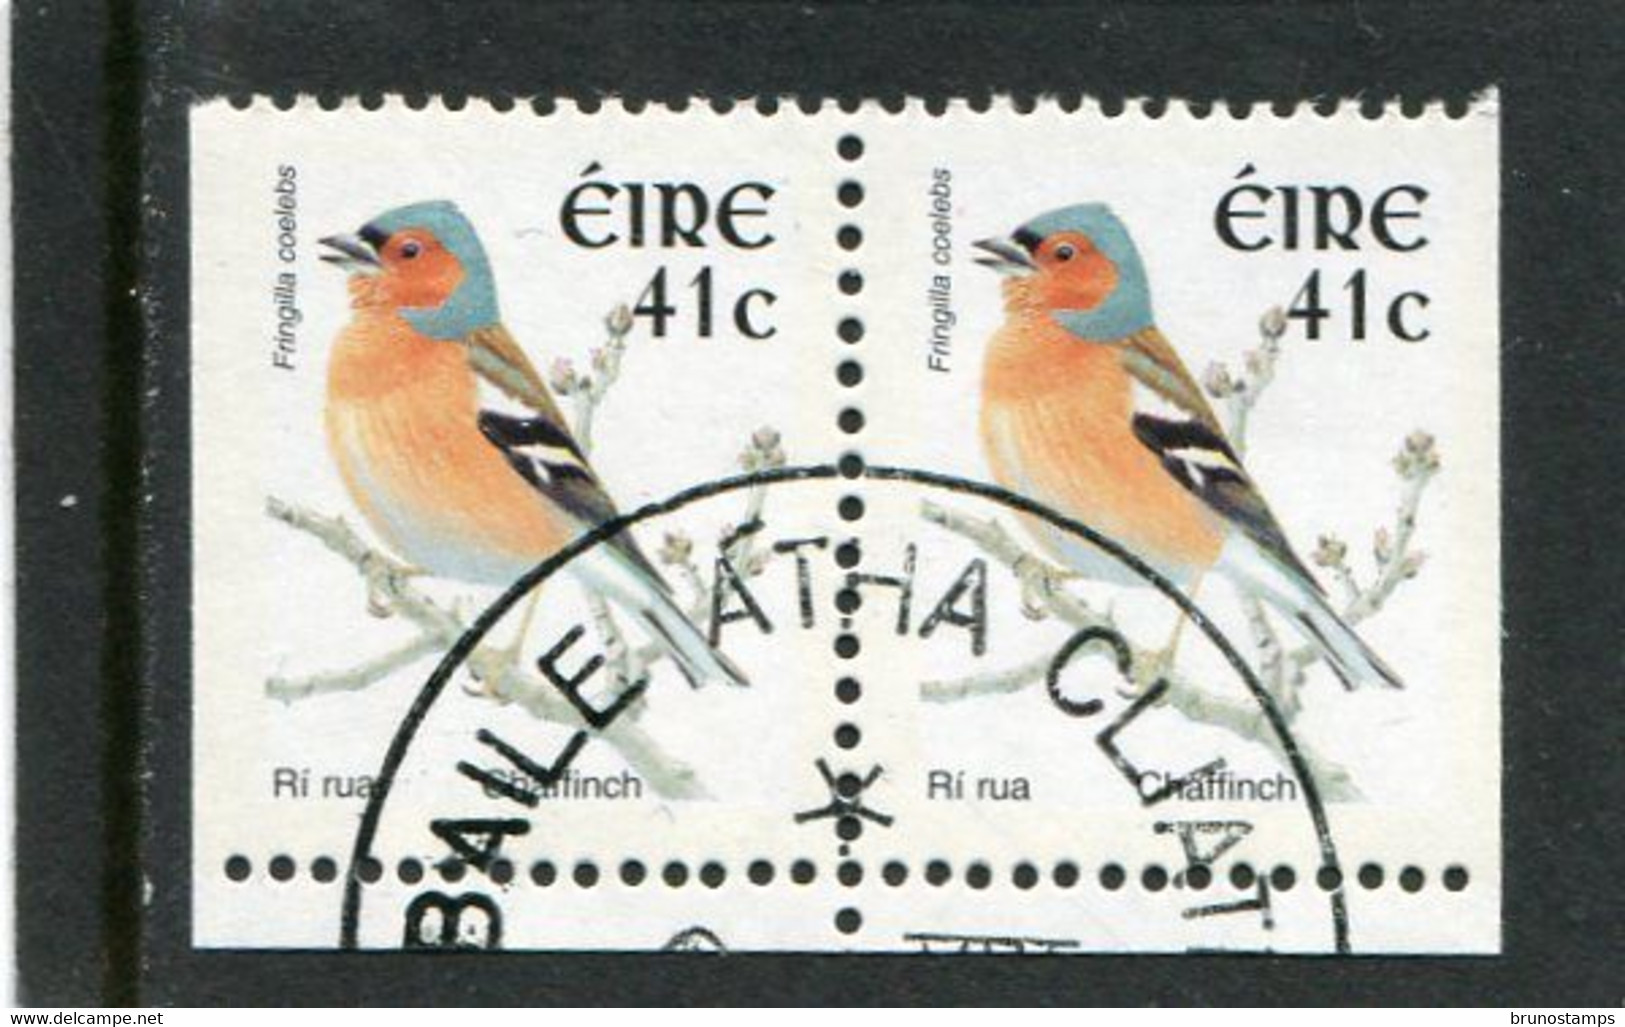 IRELAND/EIRE - 2002  41c  BIRDS  SMALLER SIZE  PAIR  EX BOOKLET  FINE USED - Oblitérés